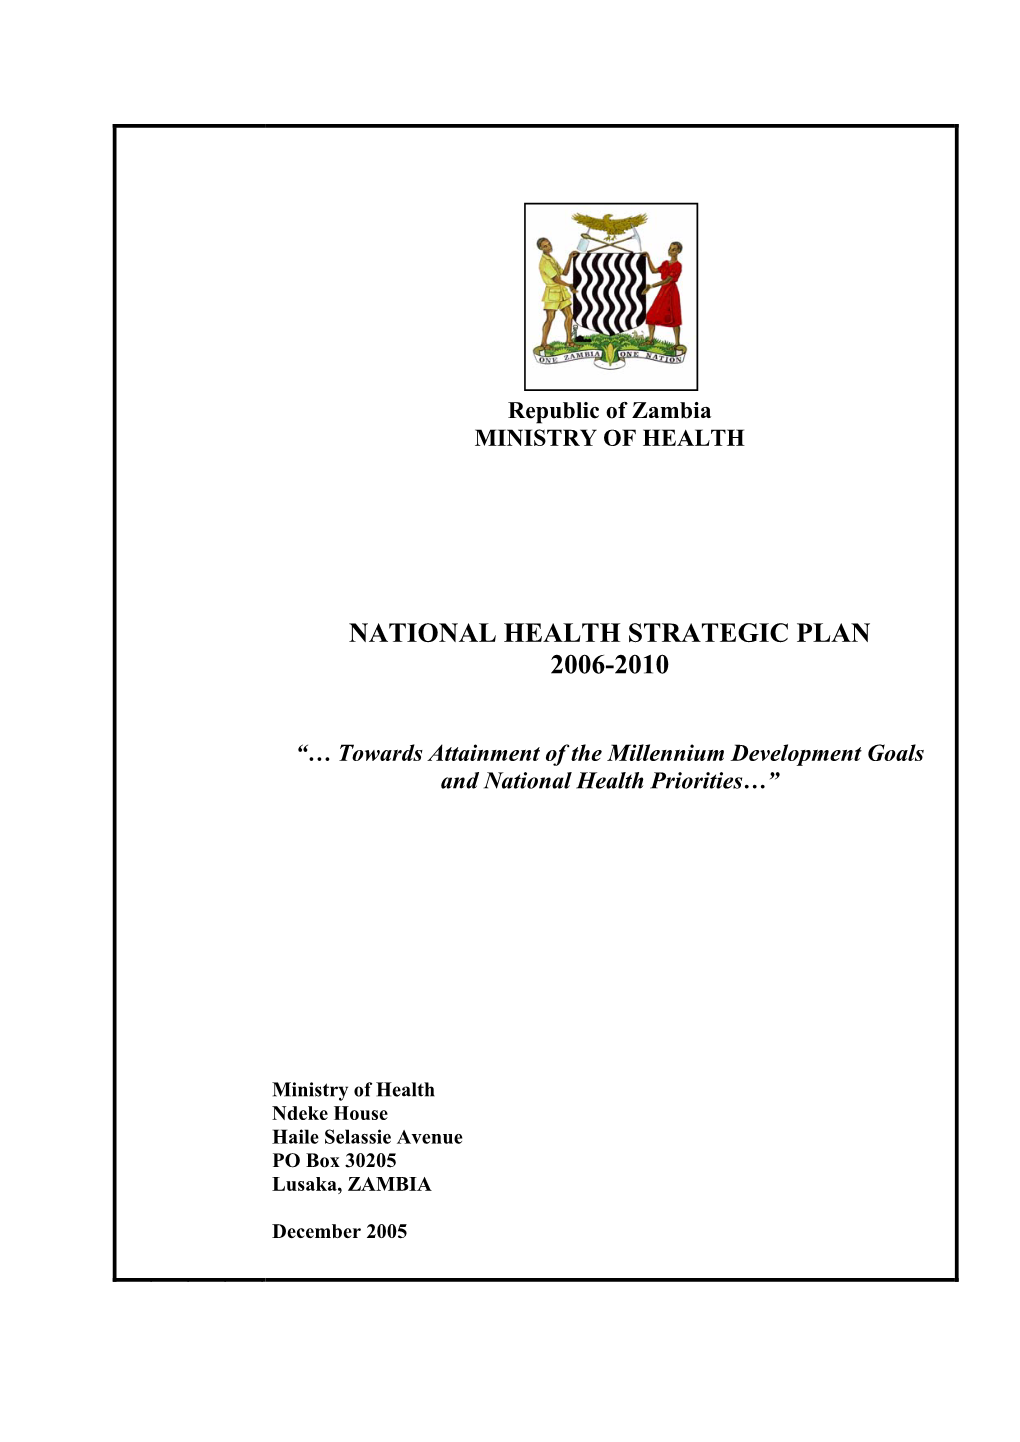 National Health Strategic Plan 2006-2010